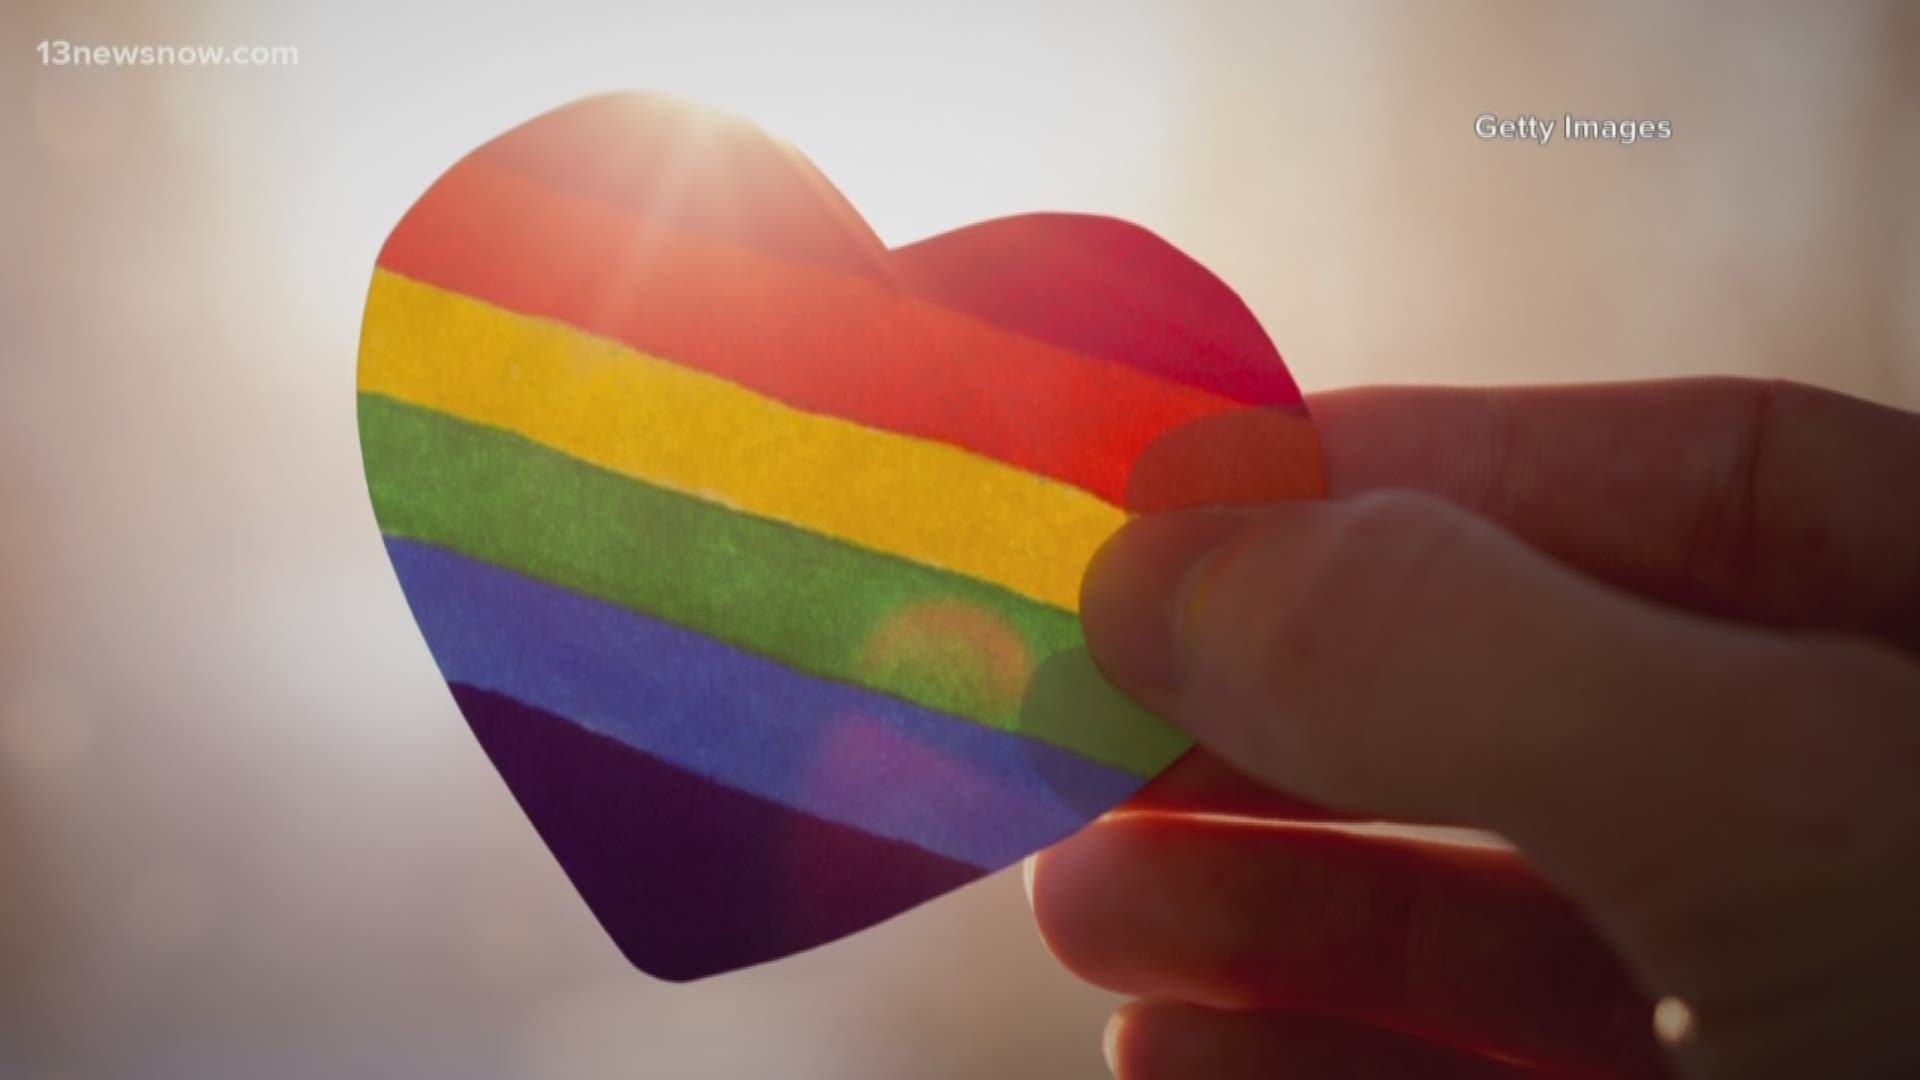 The Virginia Senate advanced some pieces of legislation that impact the LGBTQ community.